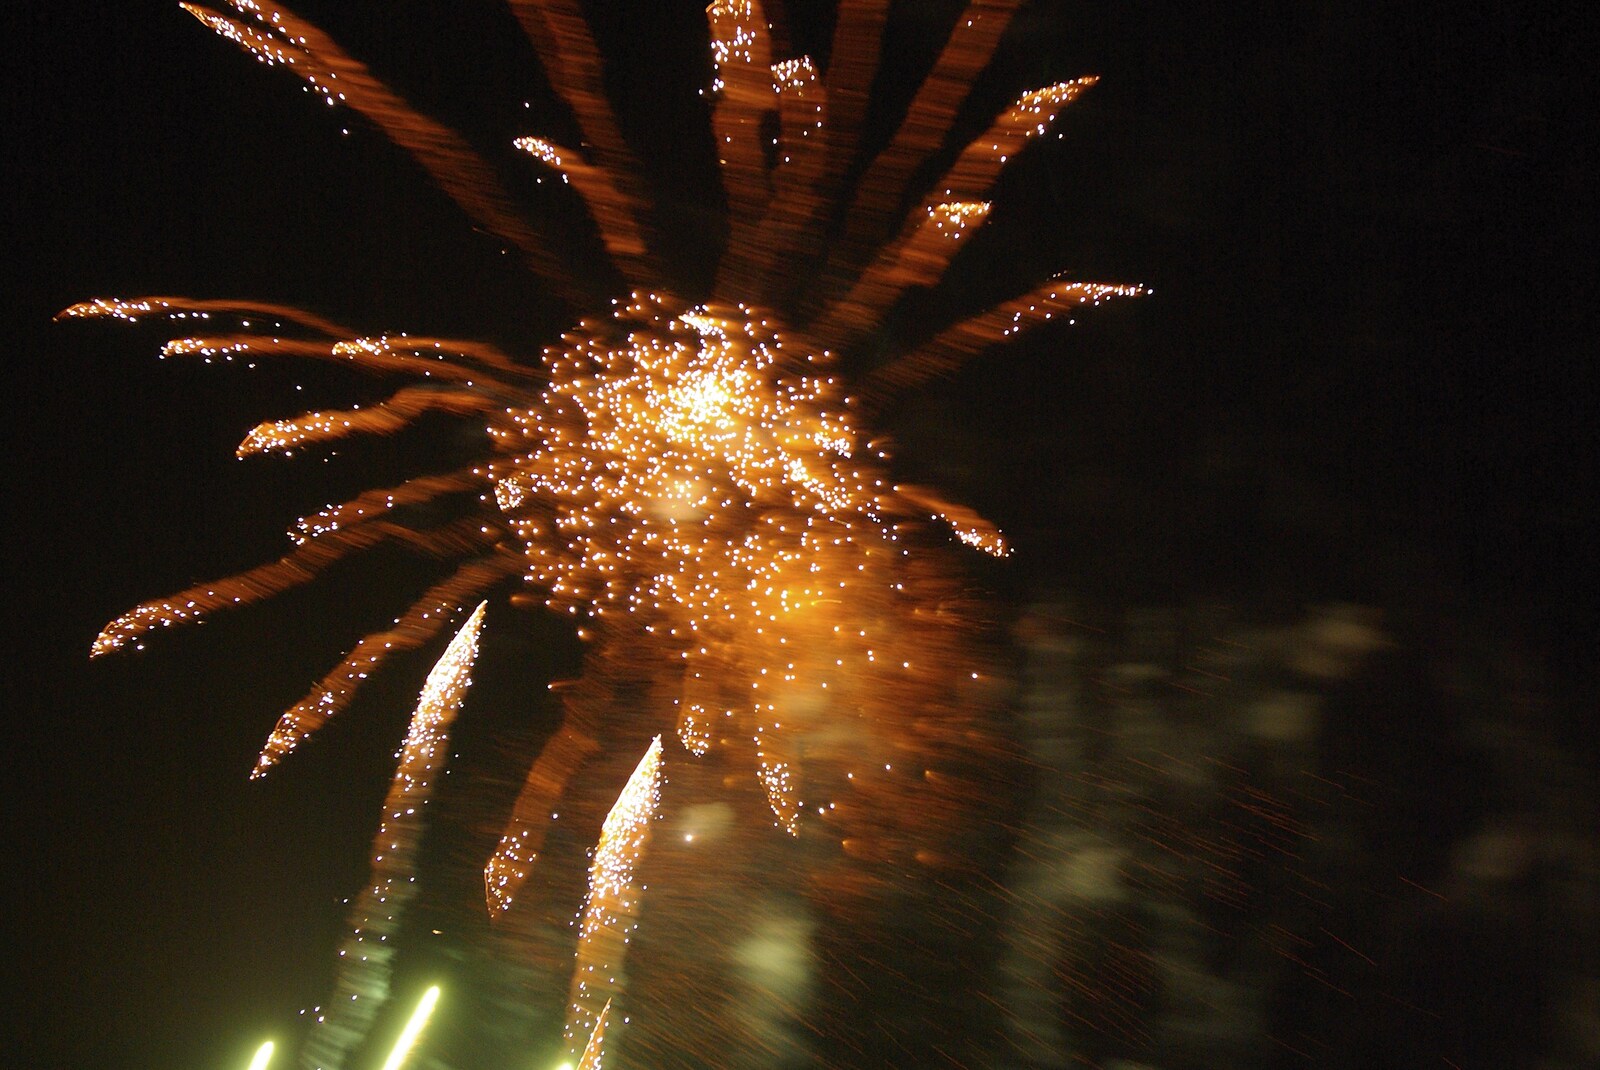 Cambridge Fireworks, and Dinner at Caroline and John's, Cambridge - 5th November 2007: An exploding chrysanthemum